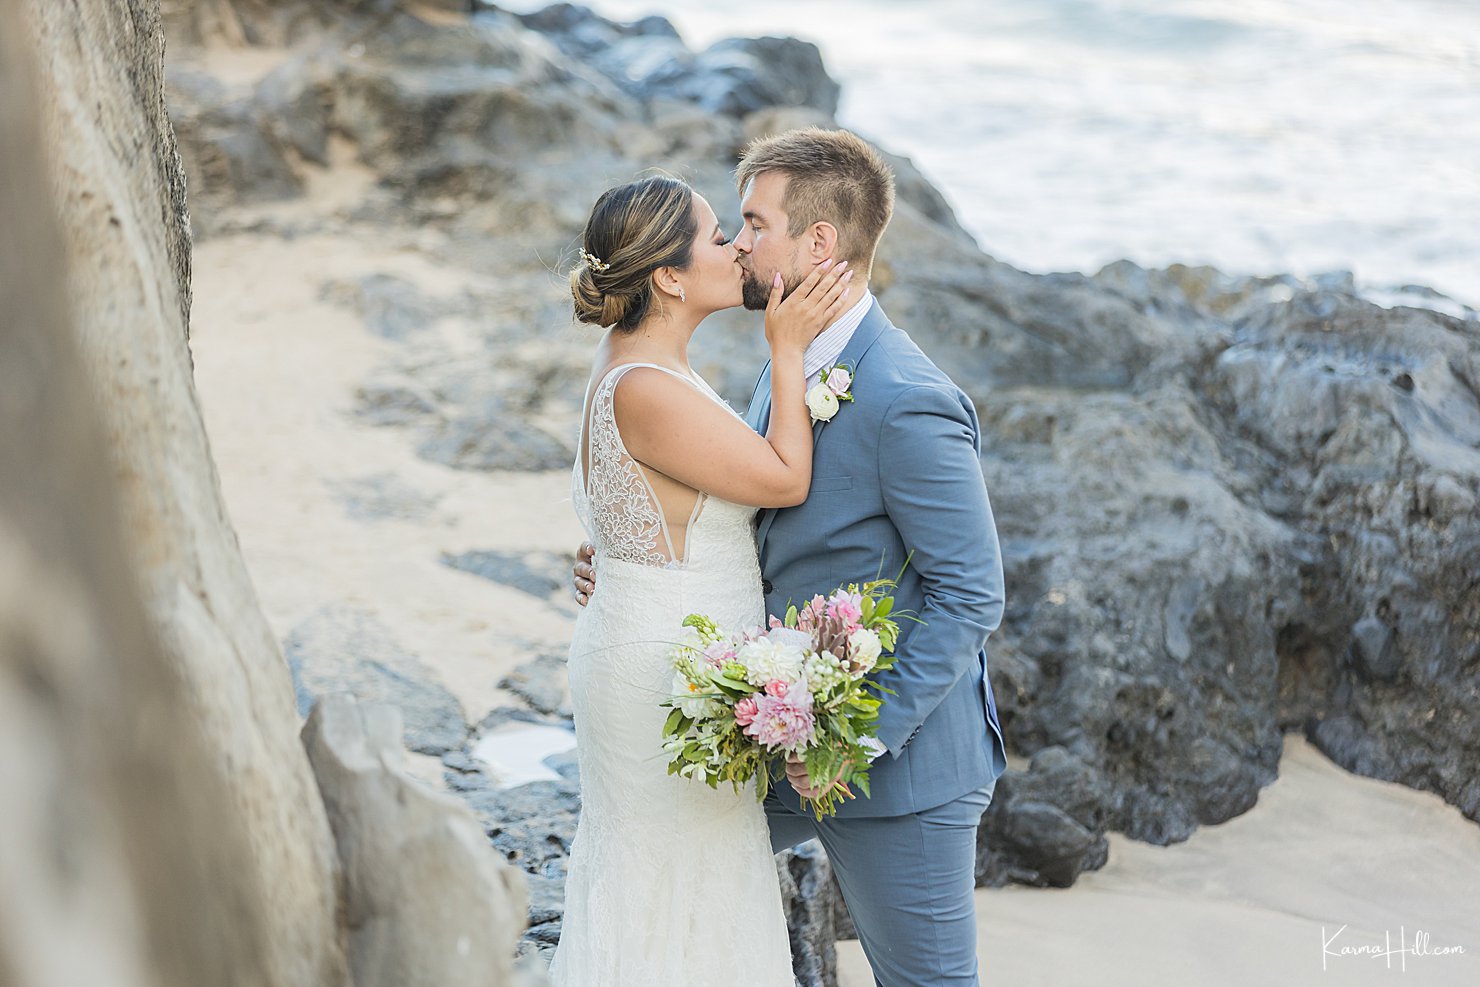 Beach wedding in Maui